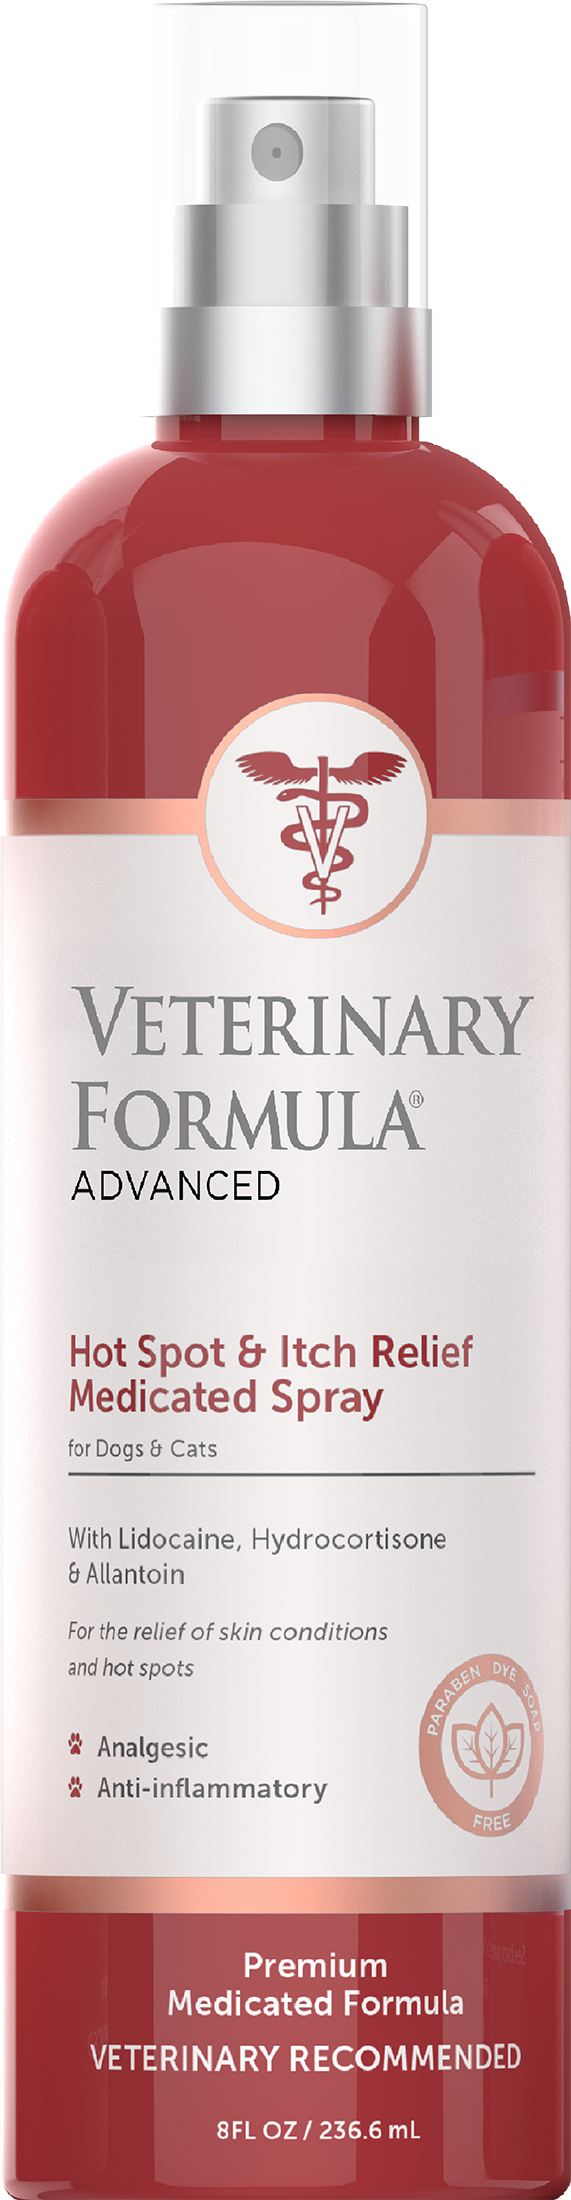 Veterinary Formula Advanced Hot Spot & Itch Relief Medicated Spray (8 oz)